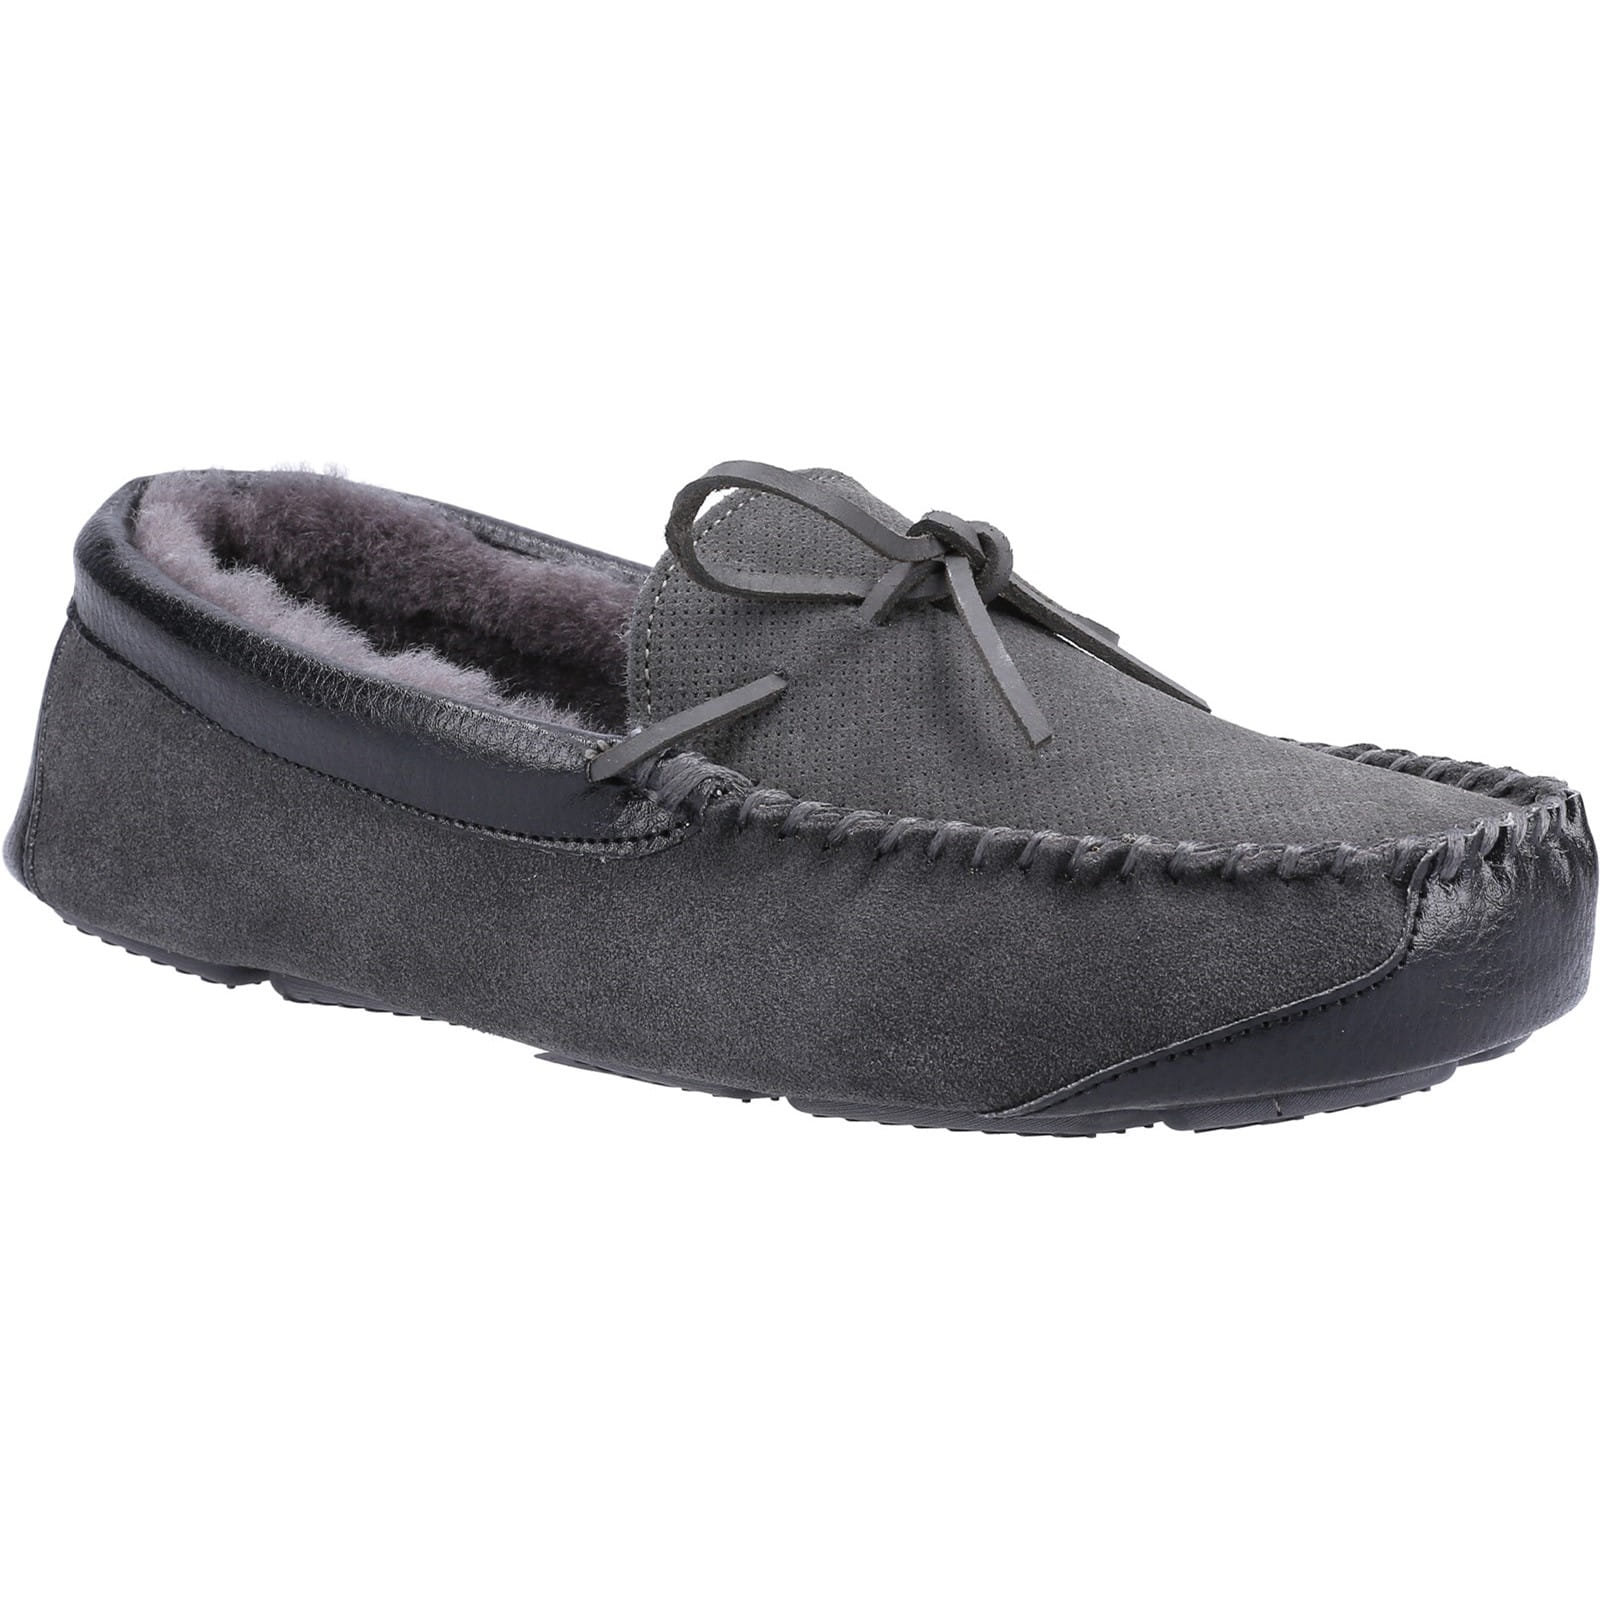 Cotswold Men's Northwood Slip On Sheepskin Moccasin Slippers Shoes - UK 12